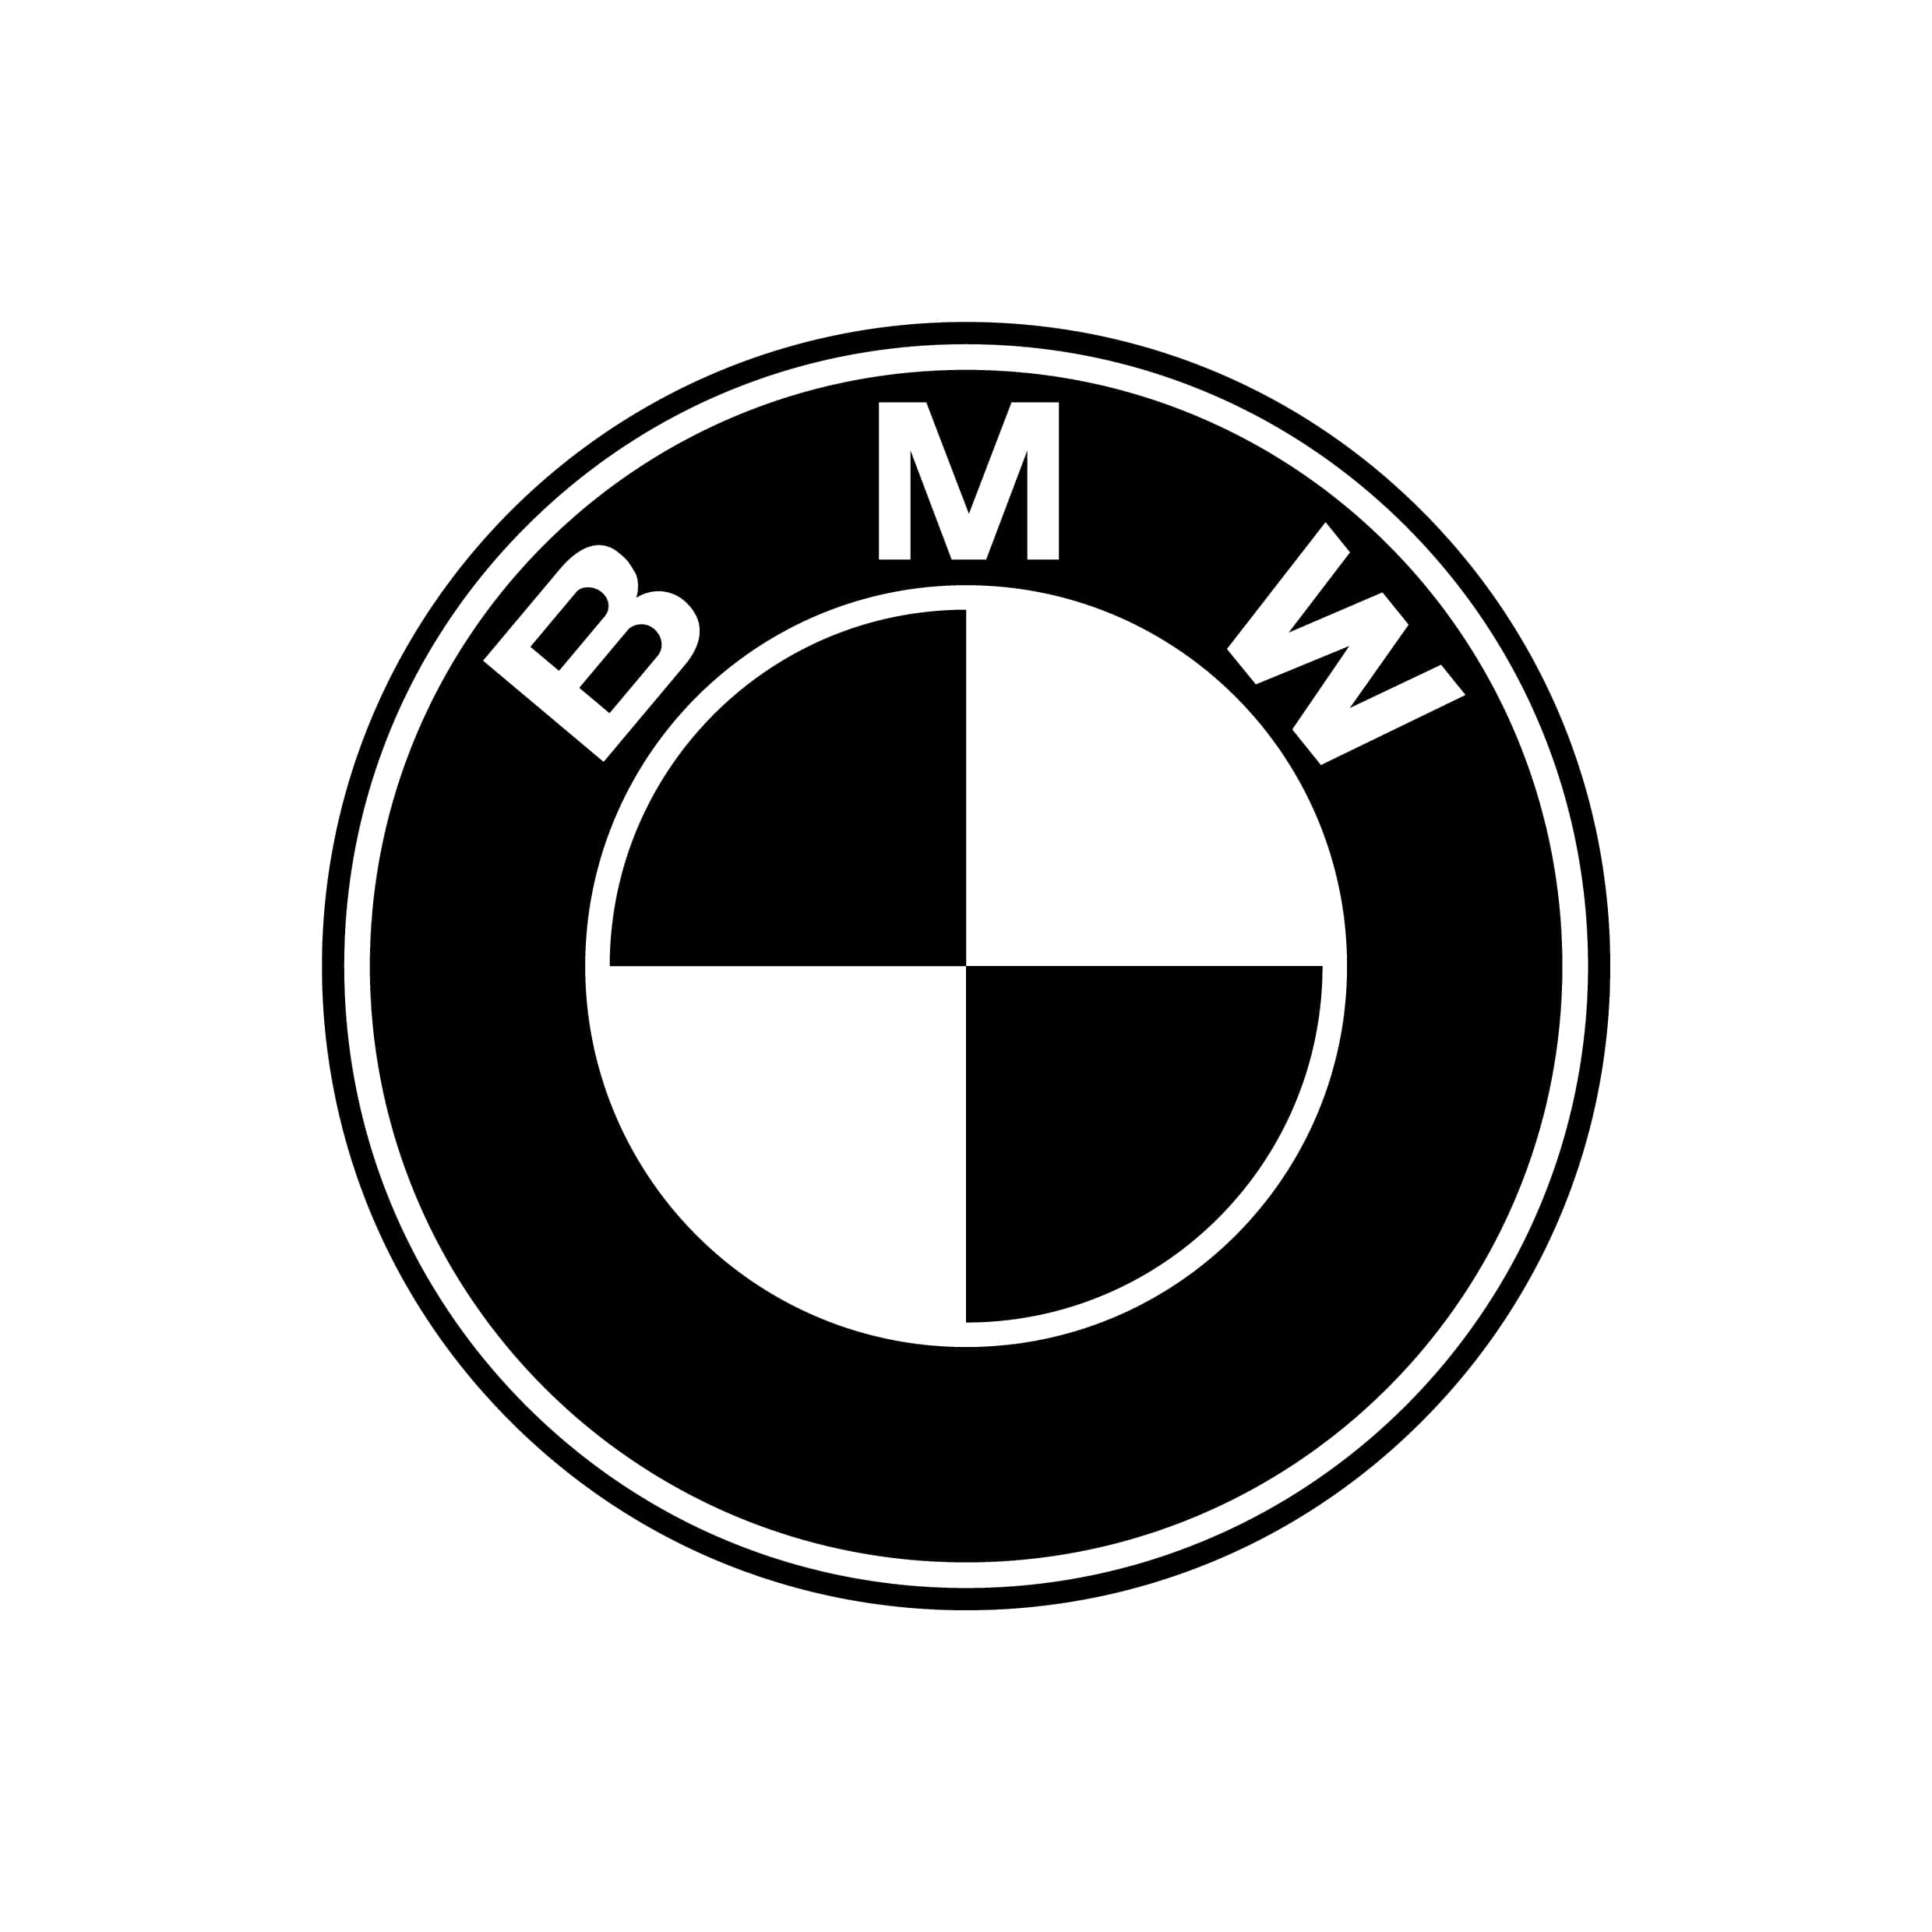 stickers-bmw-ref4-autocollant-voiture-sticker-auto-autocollants-decals-sponsors-racing-tuning-sport-logo-min